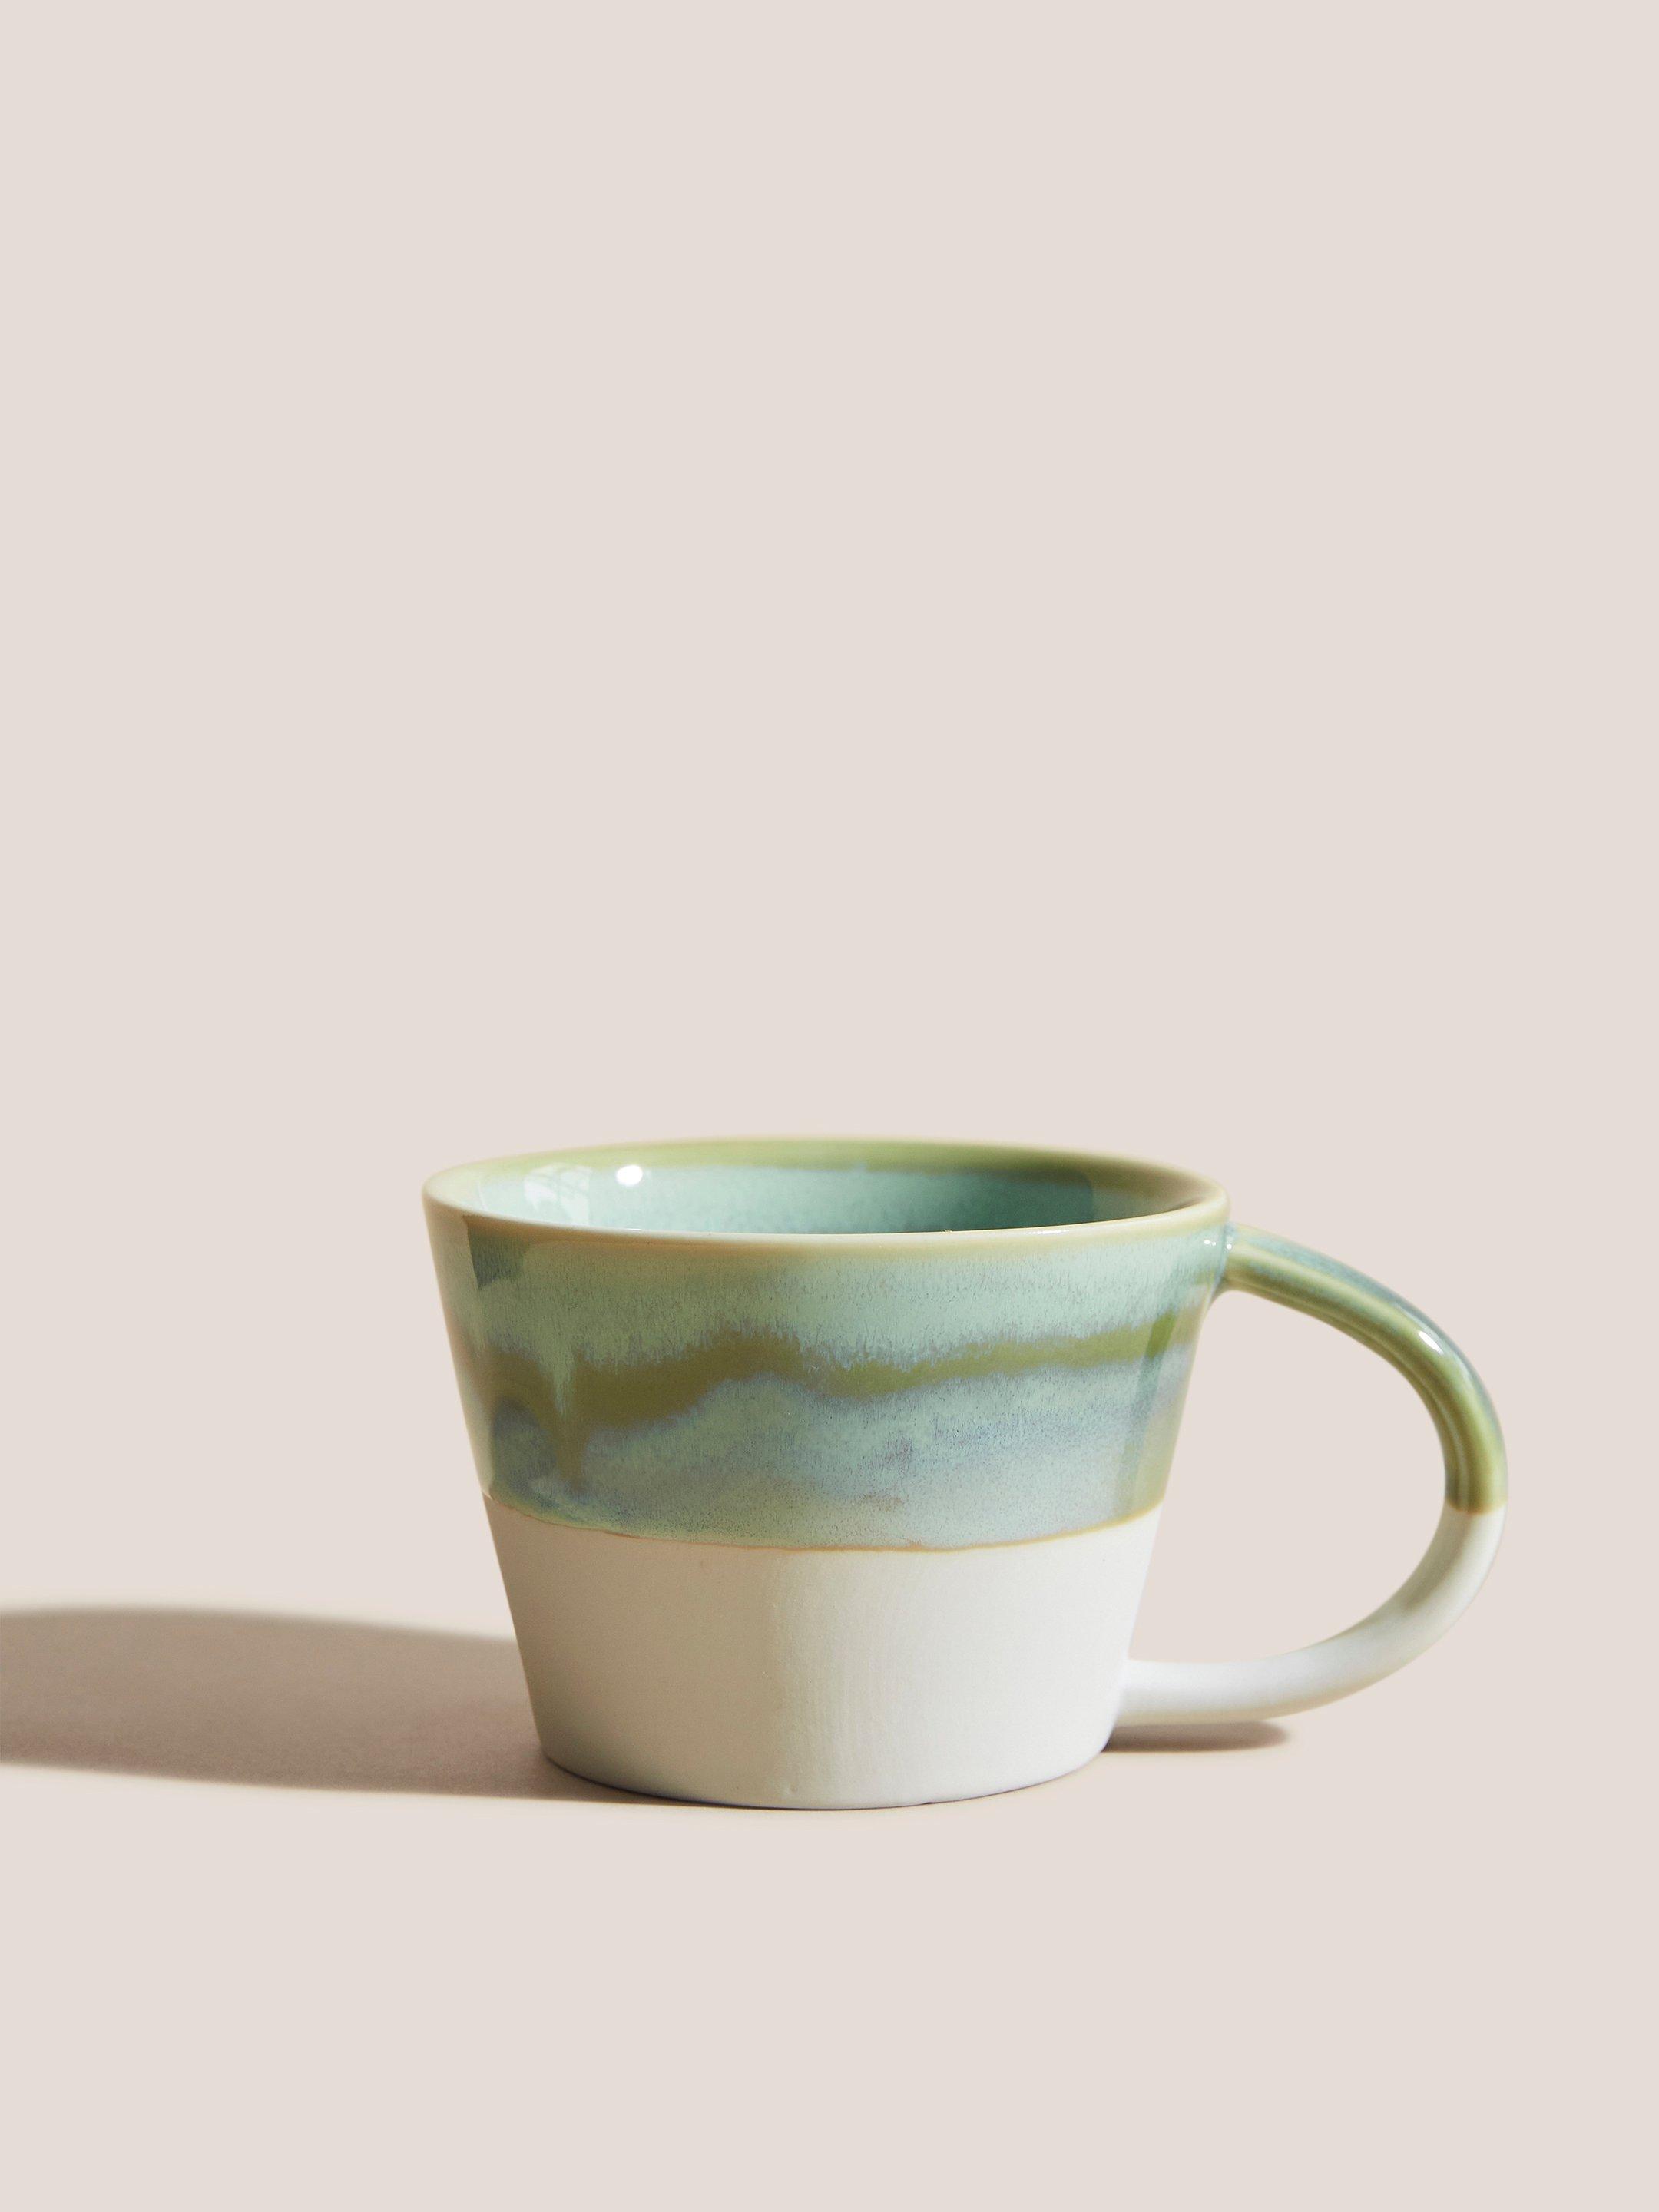 Dipped Glaze Mug in GREEN PLAIN - FLAT FRONT